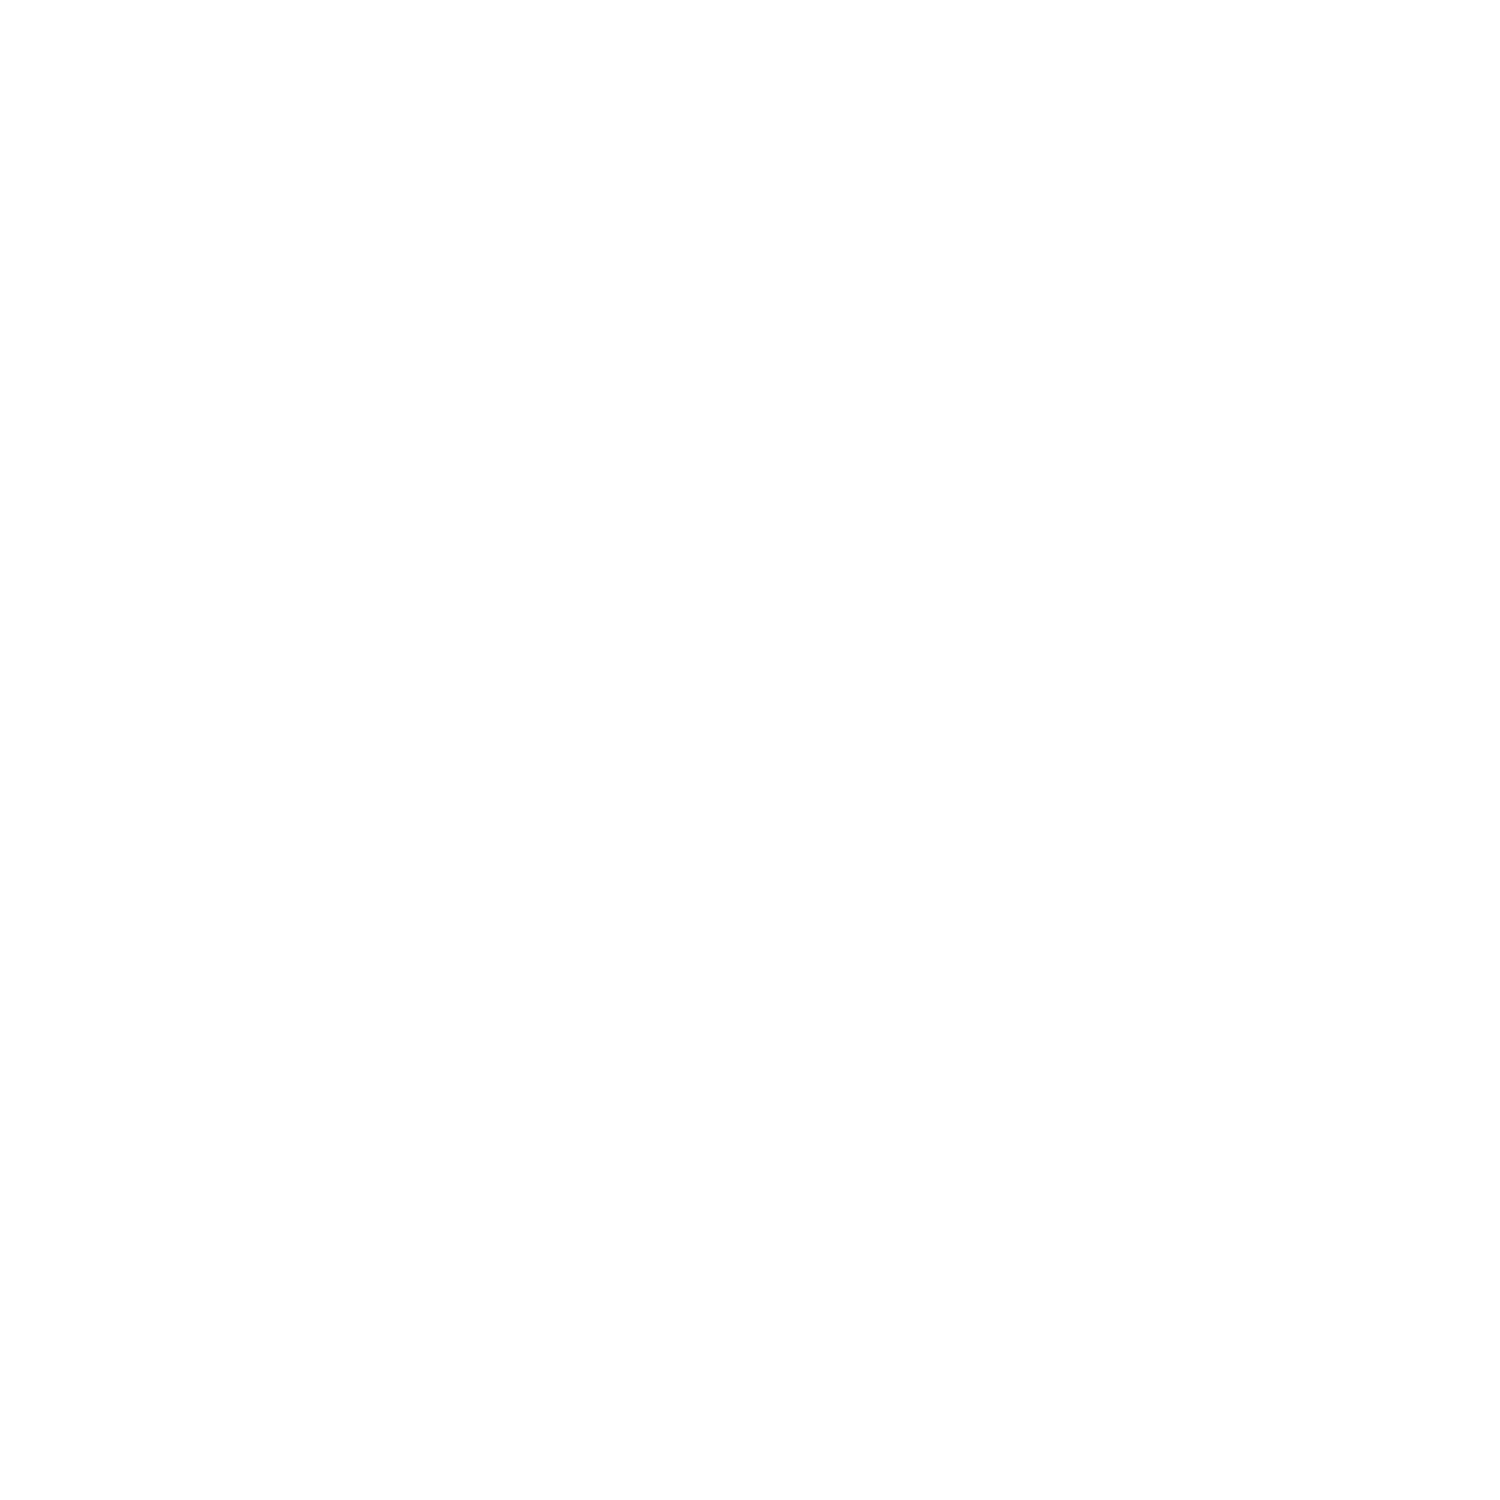 SPAN MINISTRIES